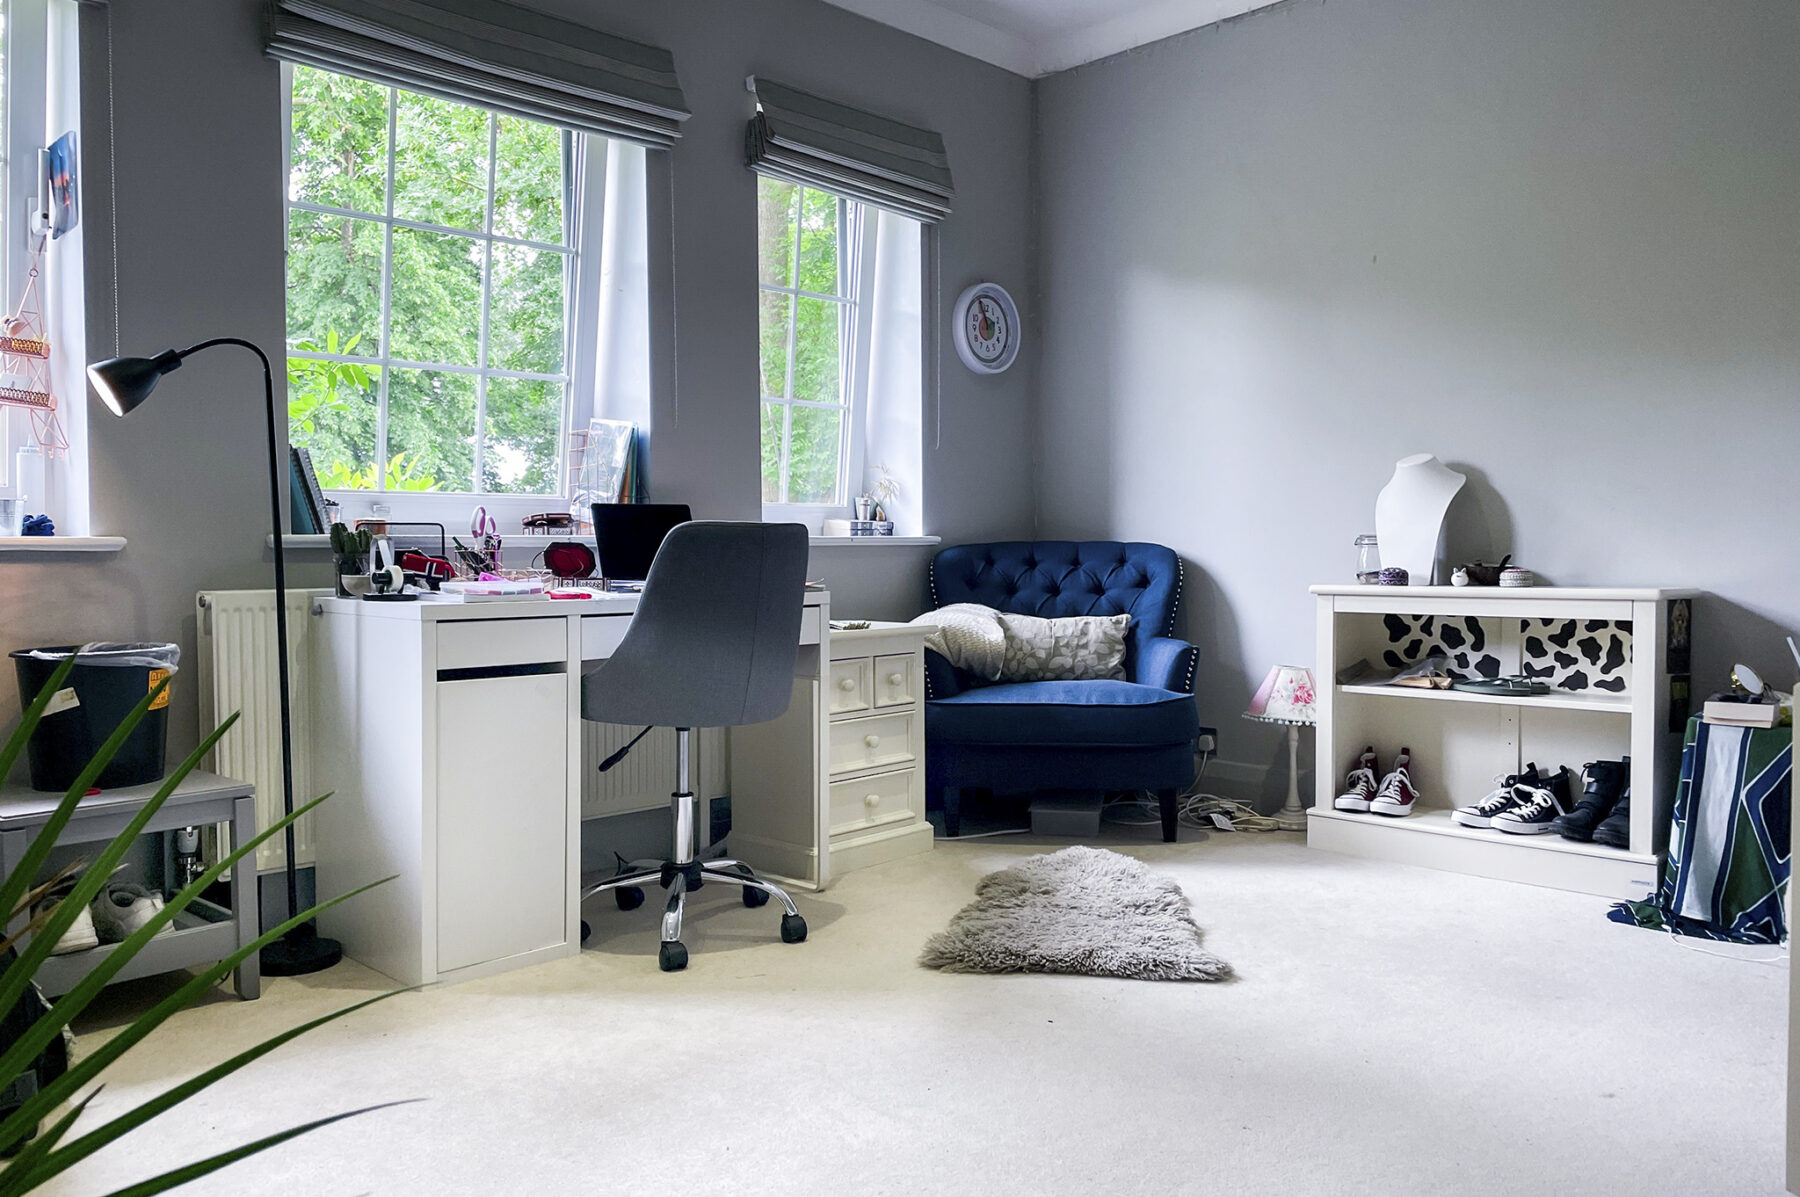 Bedroom light modern teenager room shelving study table TV filming location hire lodge London 87